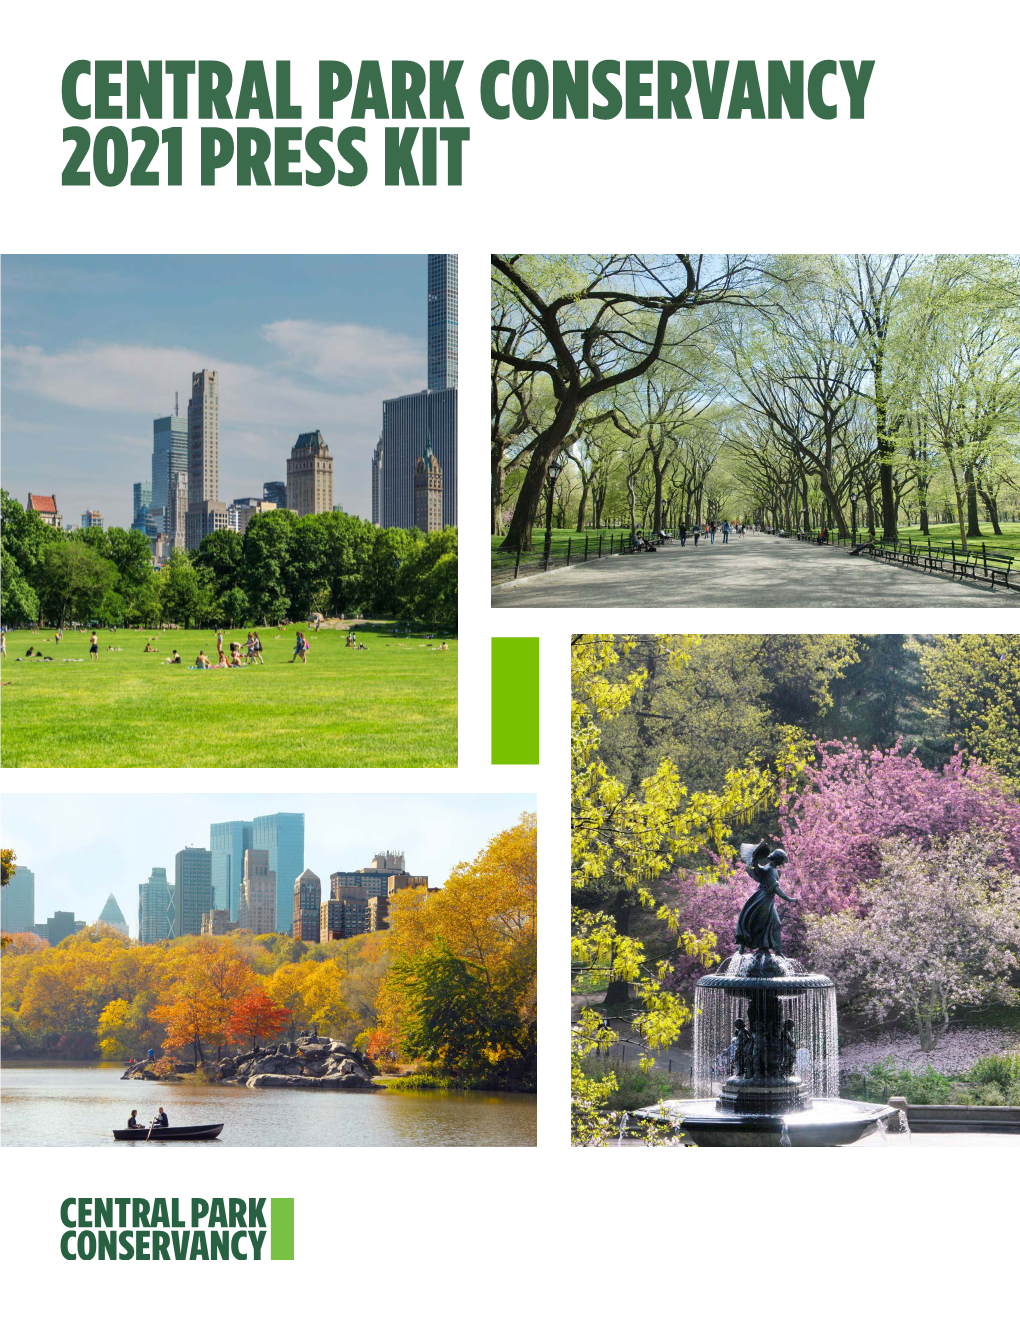 CENTRAL PARK CONSERVANCY 2021 PRESS KIT CENTRAL PARK CONSERVANCY FACTS the Central Park Conservancy